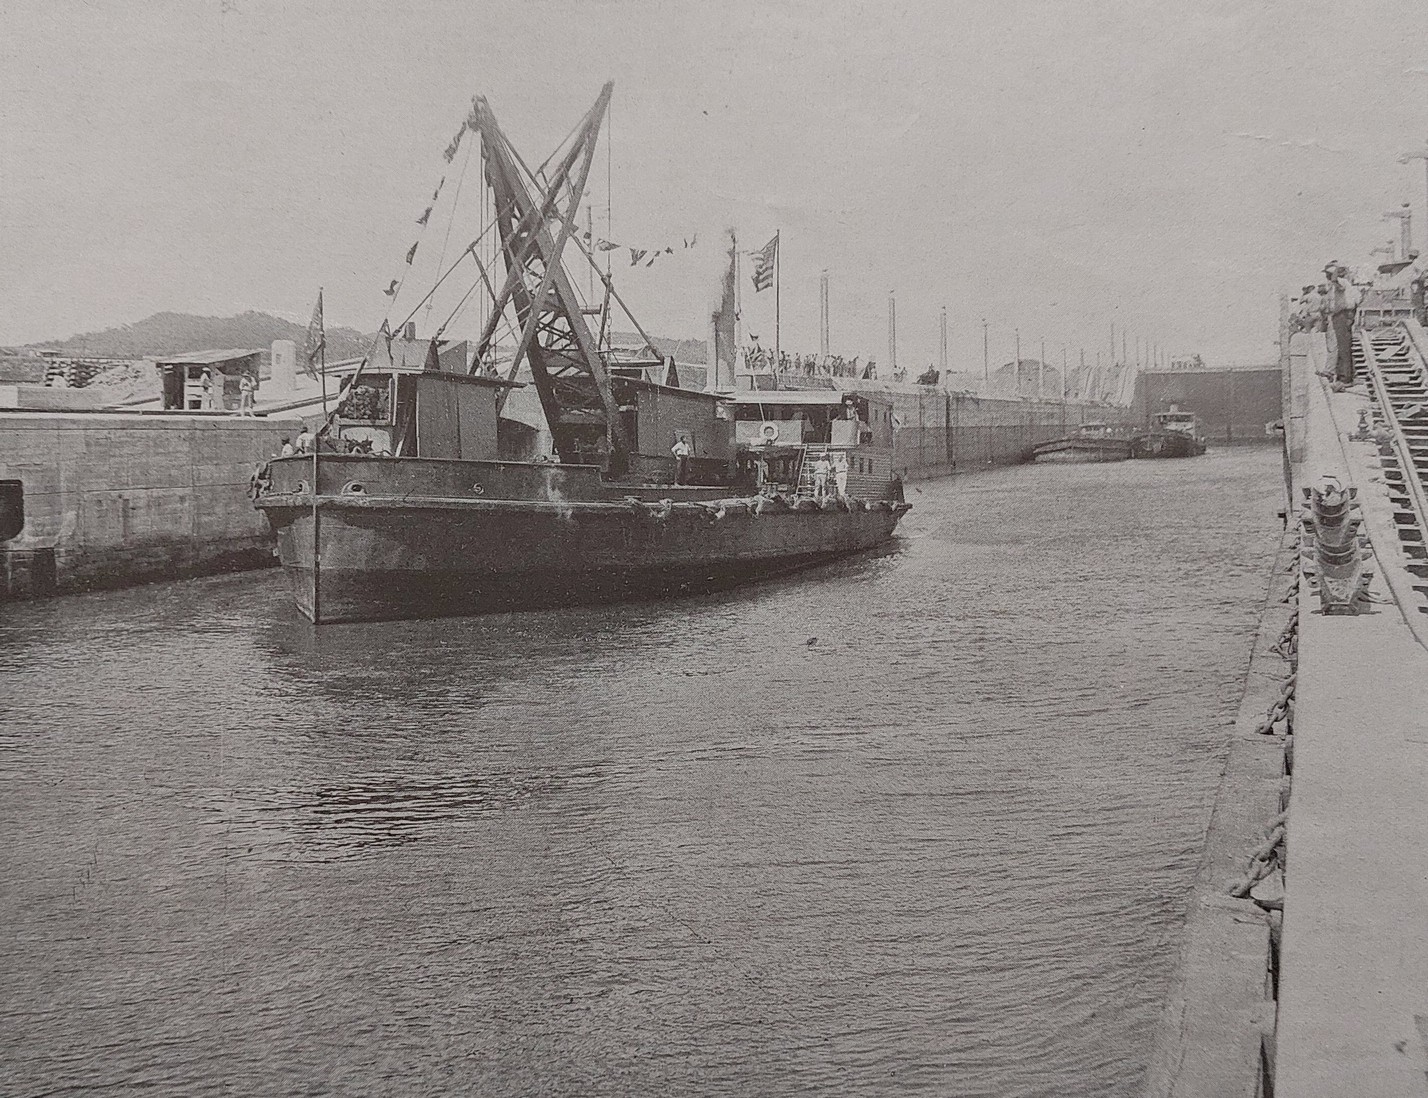 Canal de Panama LI 1914-01-31 A-.jpg